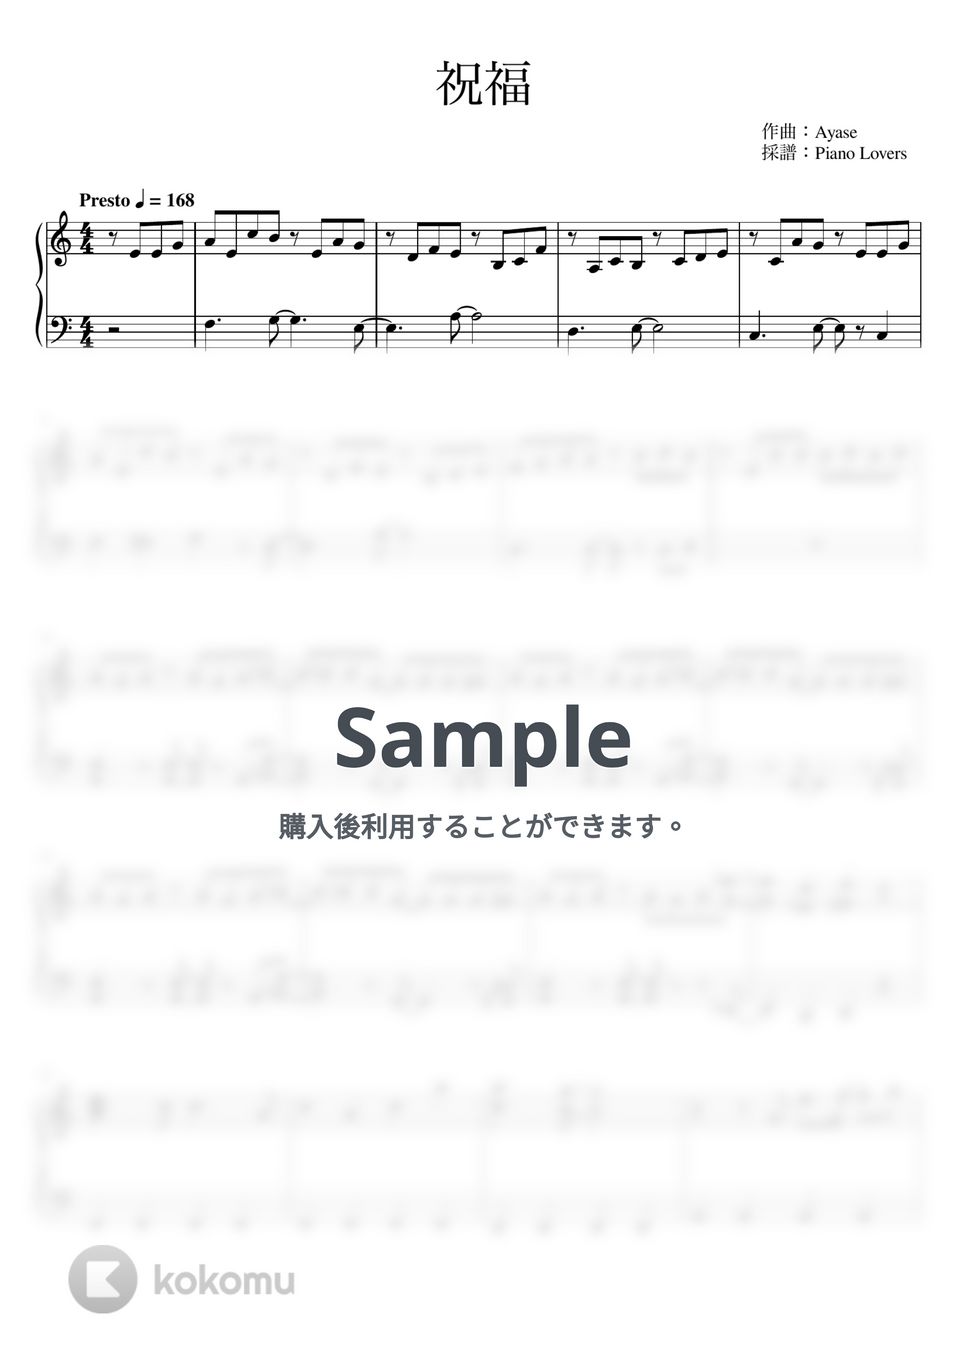 YOASOBI - 祝福 (機動戦士ガンダム / ピアノ楽譜 / 初級) by Piano Lovers. jp